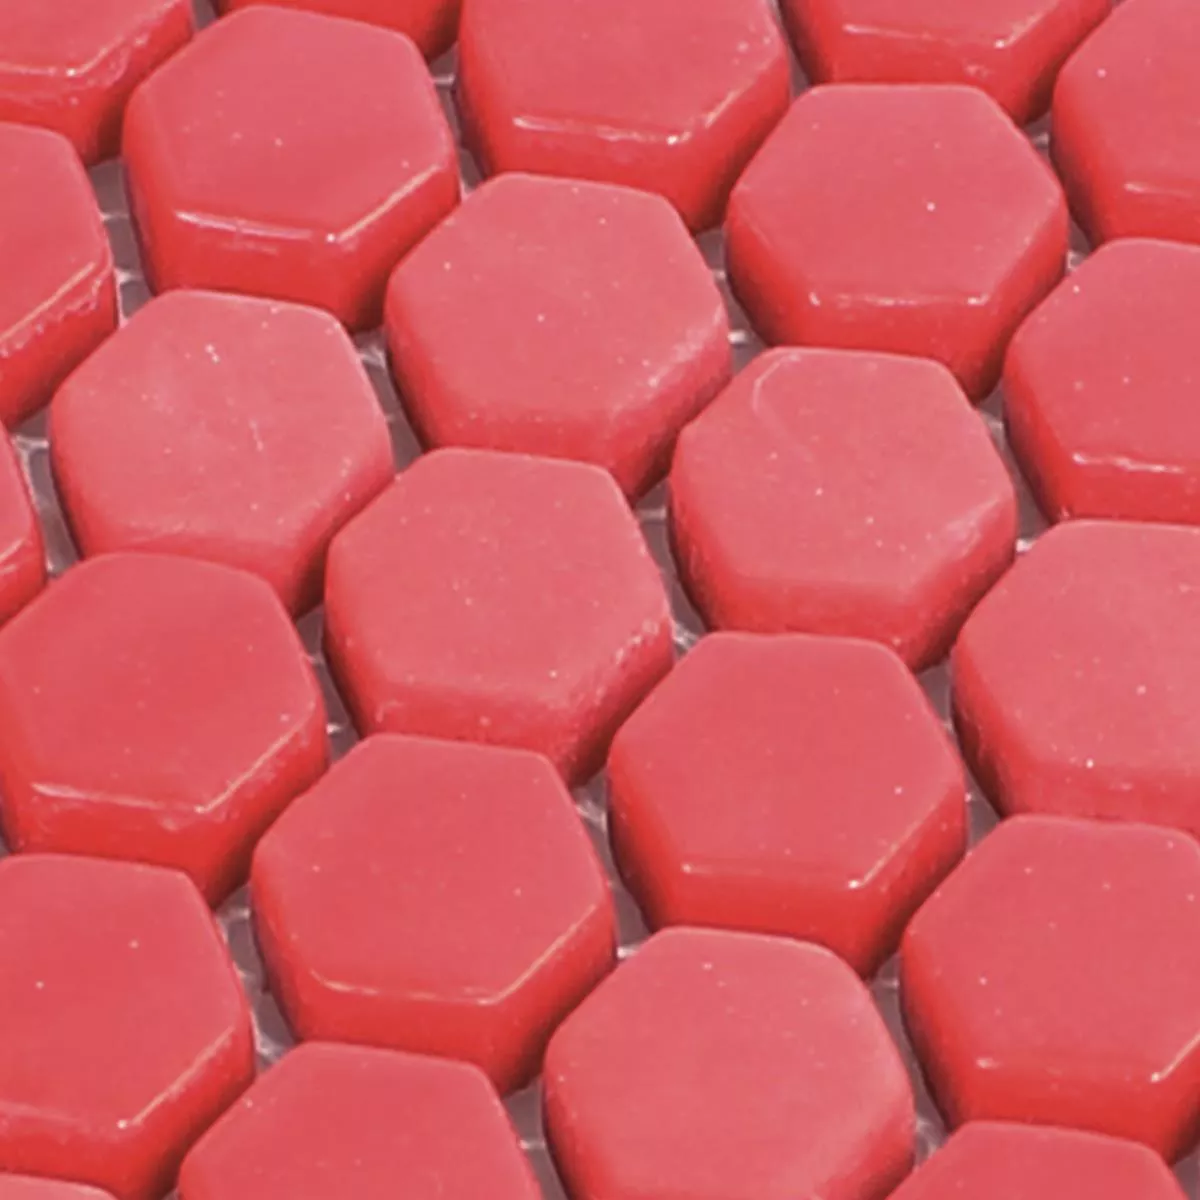 Sample Glass Mosaic Tiles Brockway Hexagon Eco Red